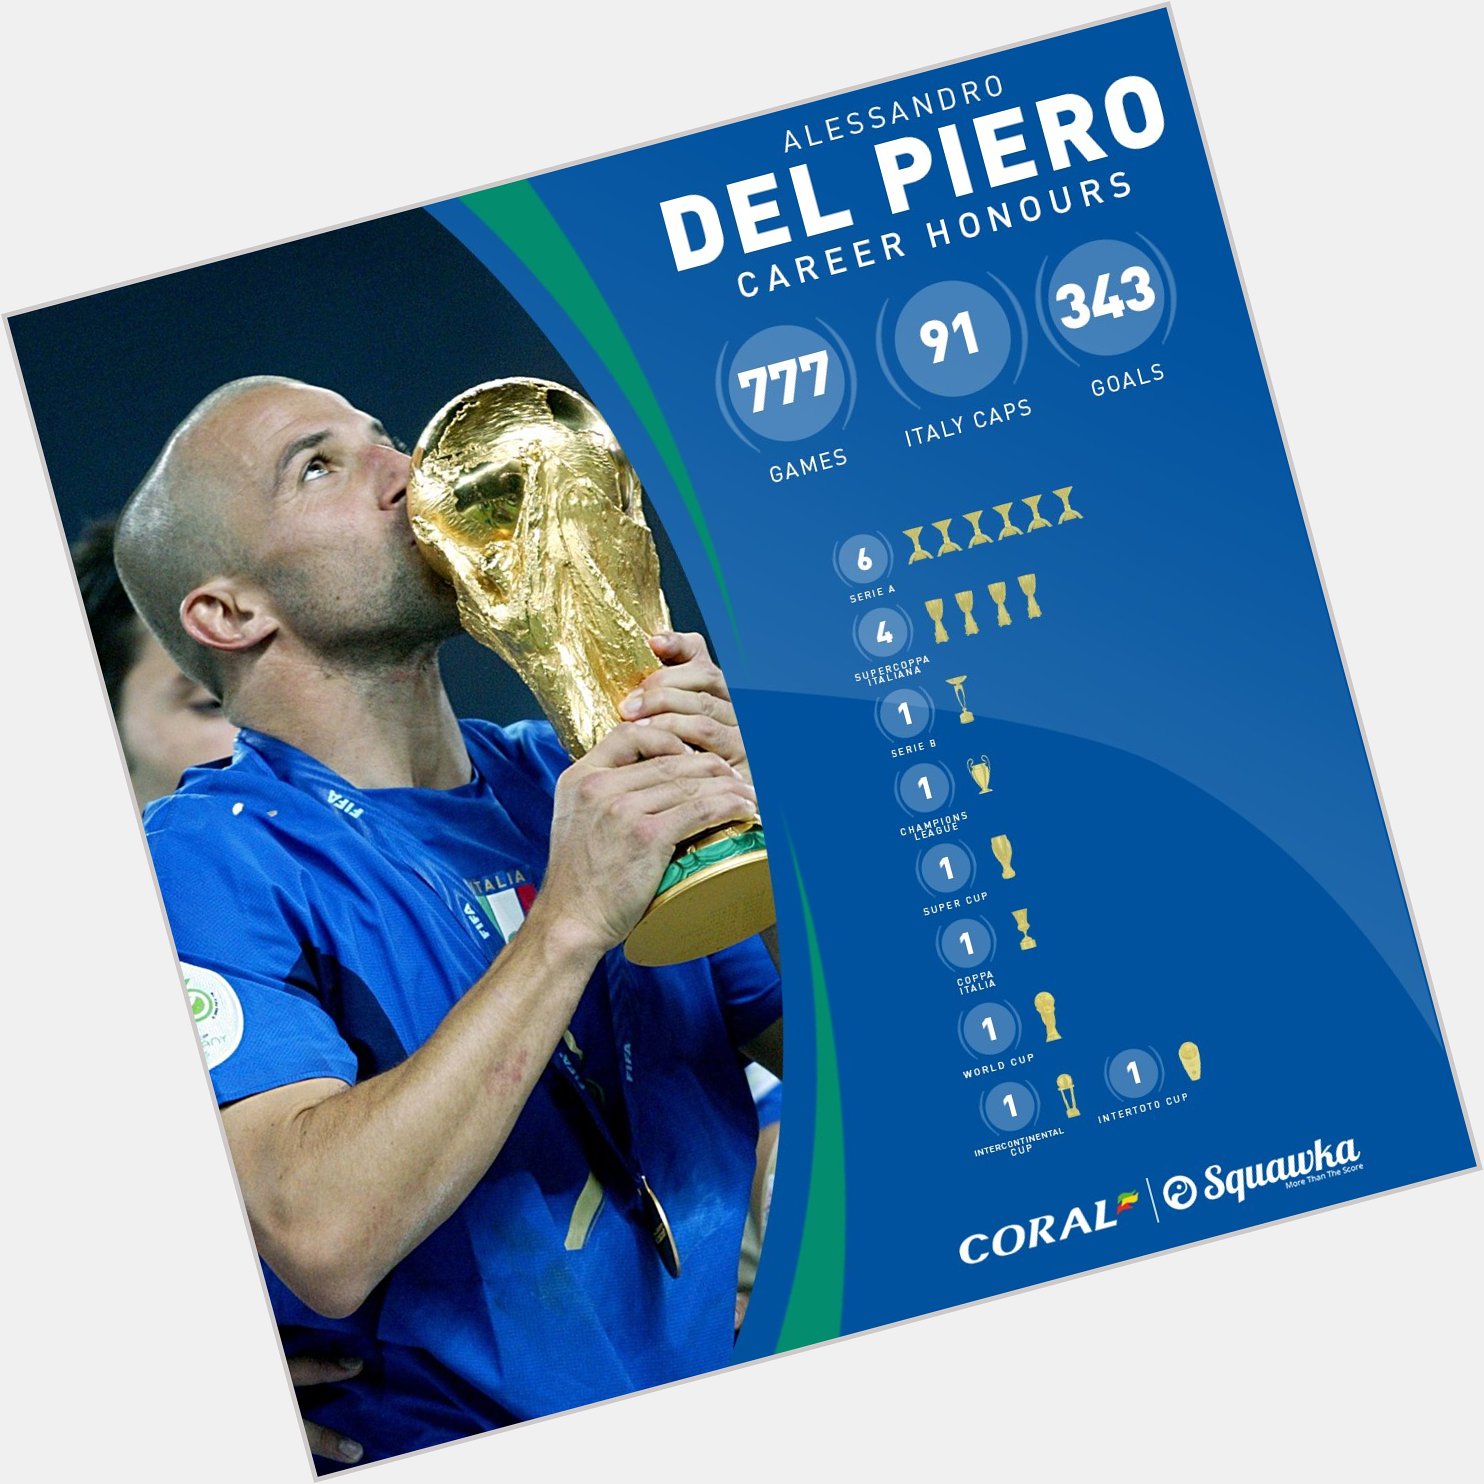 Happy 4  6  th Birthday to Alessandro Del Piero, a truly world class player in his prime  